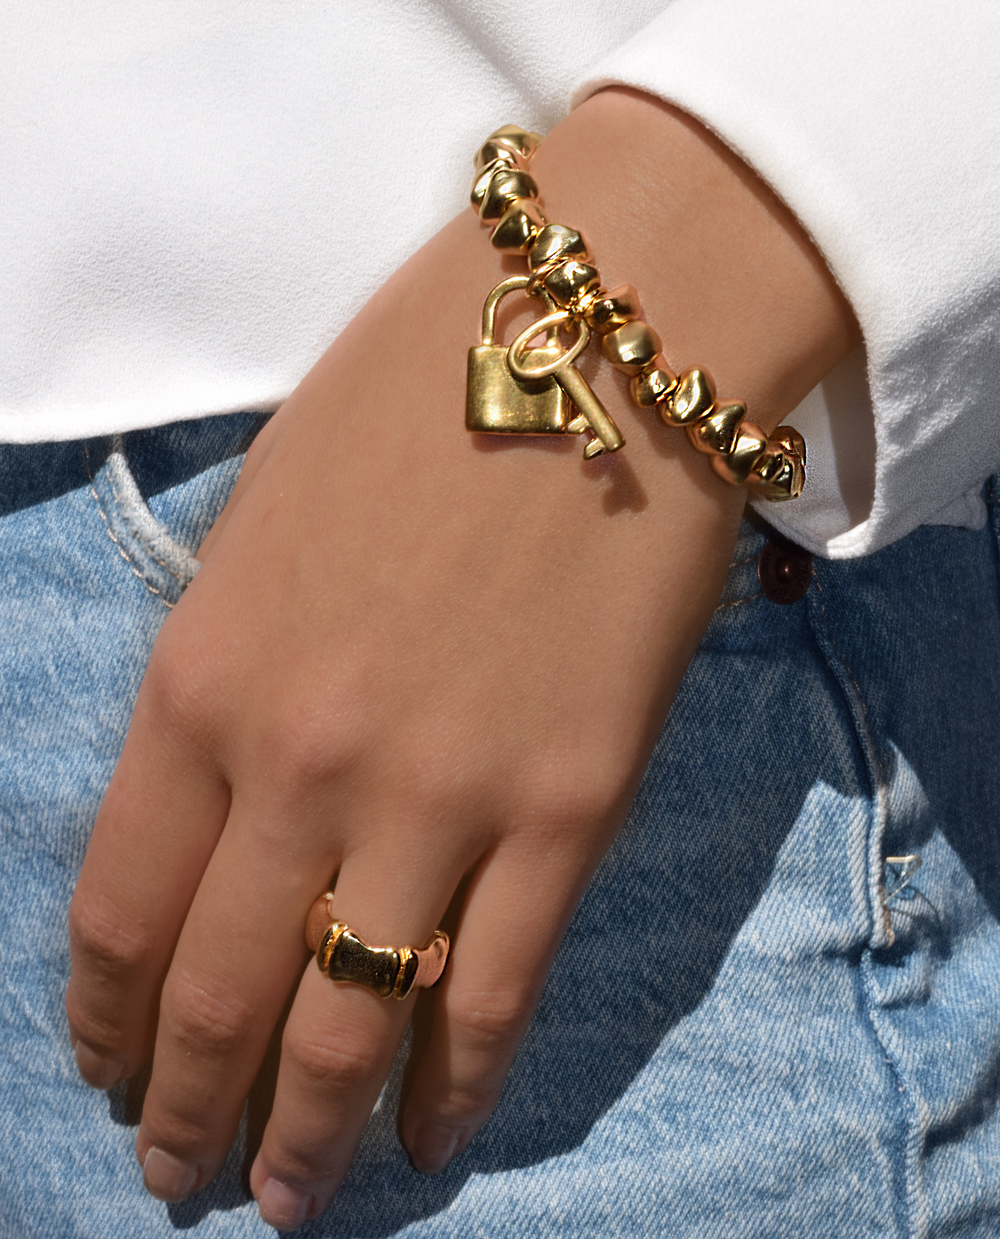 Tumbled rocks bracelet with lock and key charm - Karine Sultan